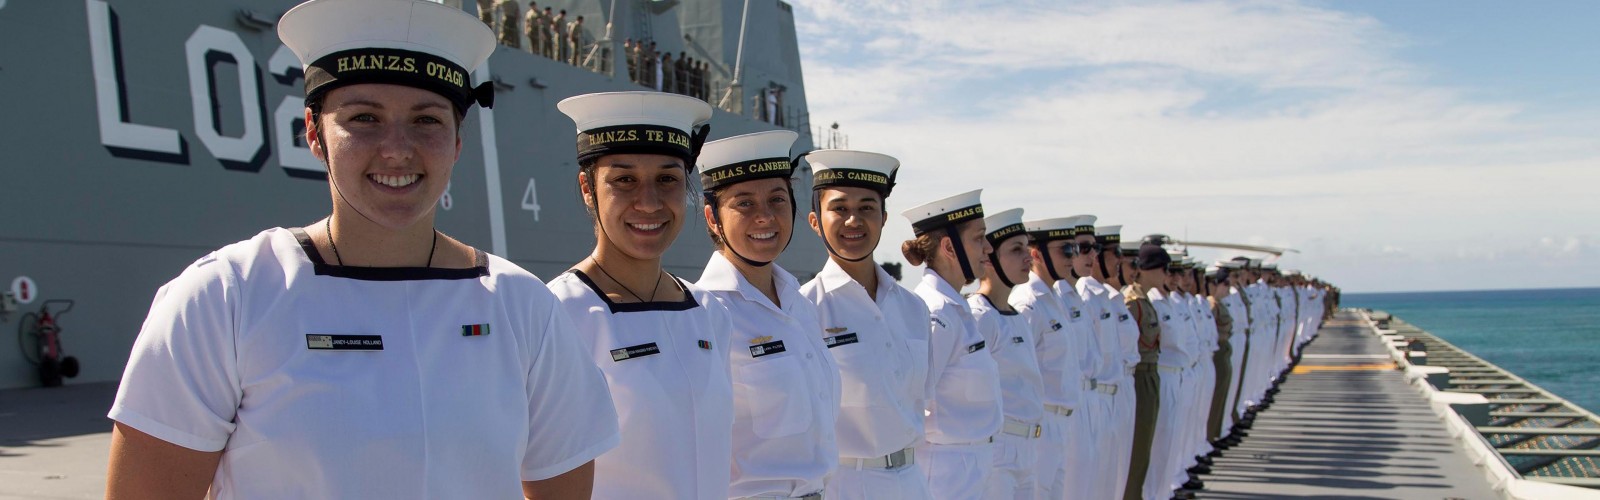 Navy Steward | Naval Hospitality | Defence Careers